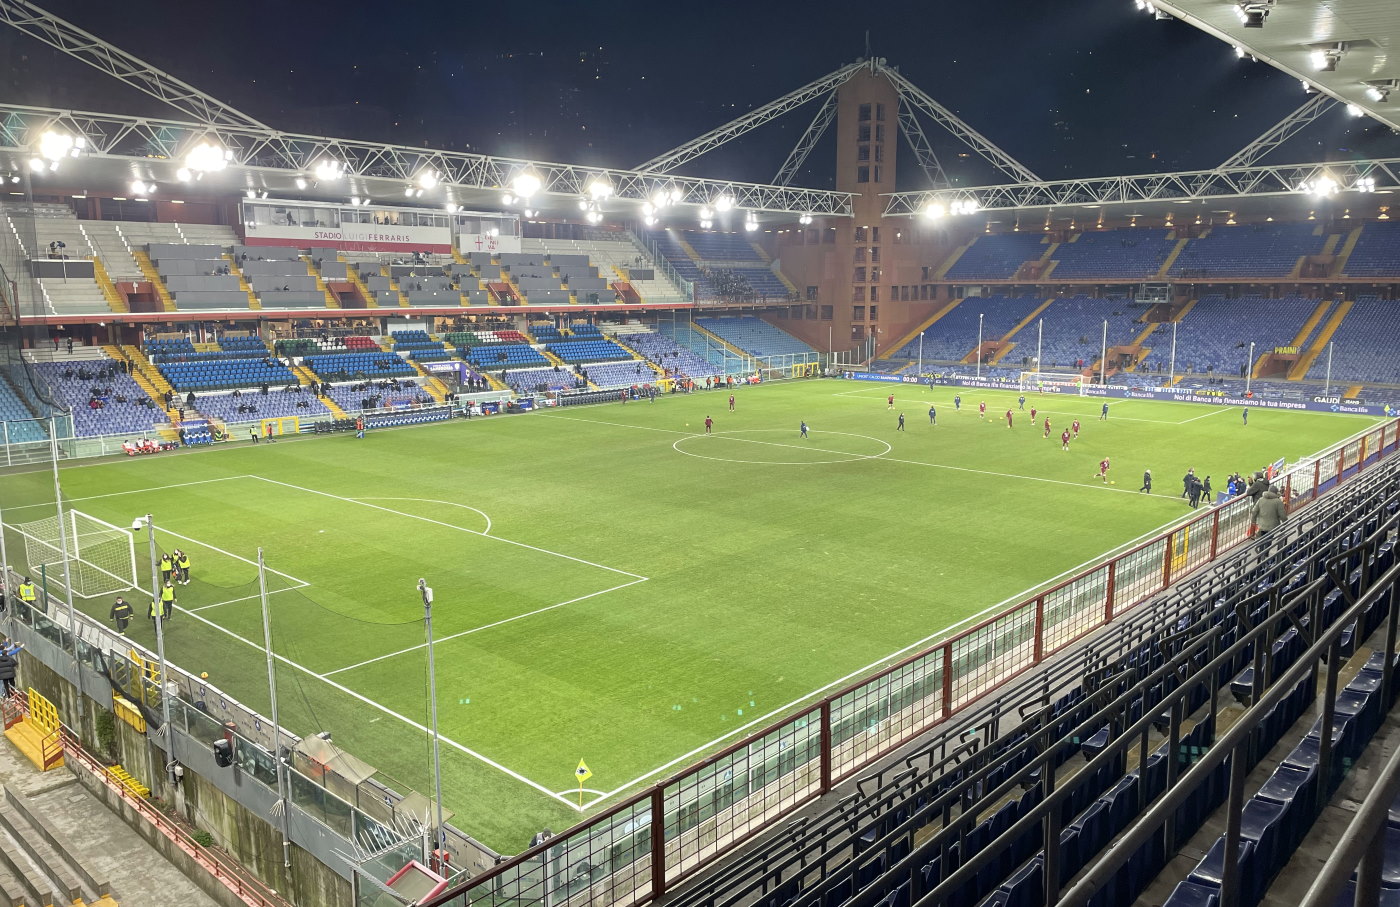 Palpite Genoa x Juventus - Serie A - 15/12/23